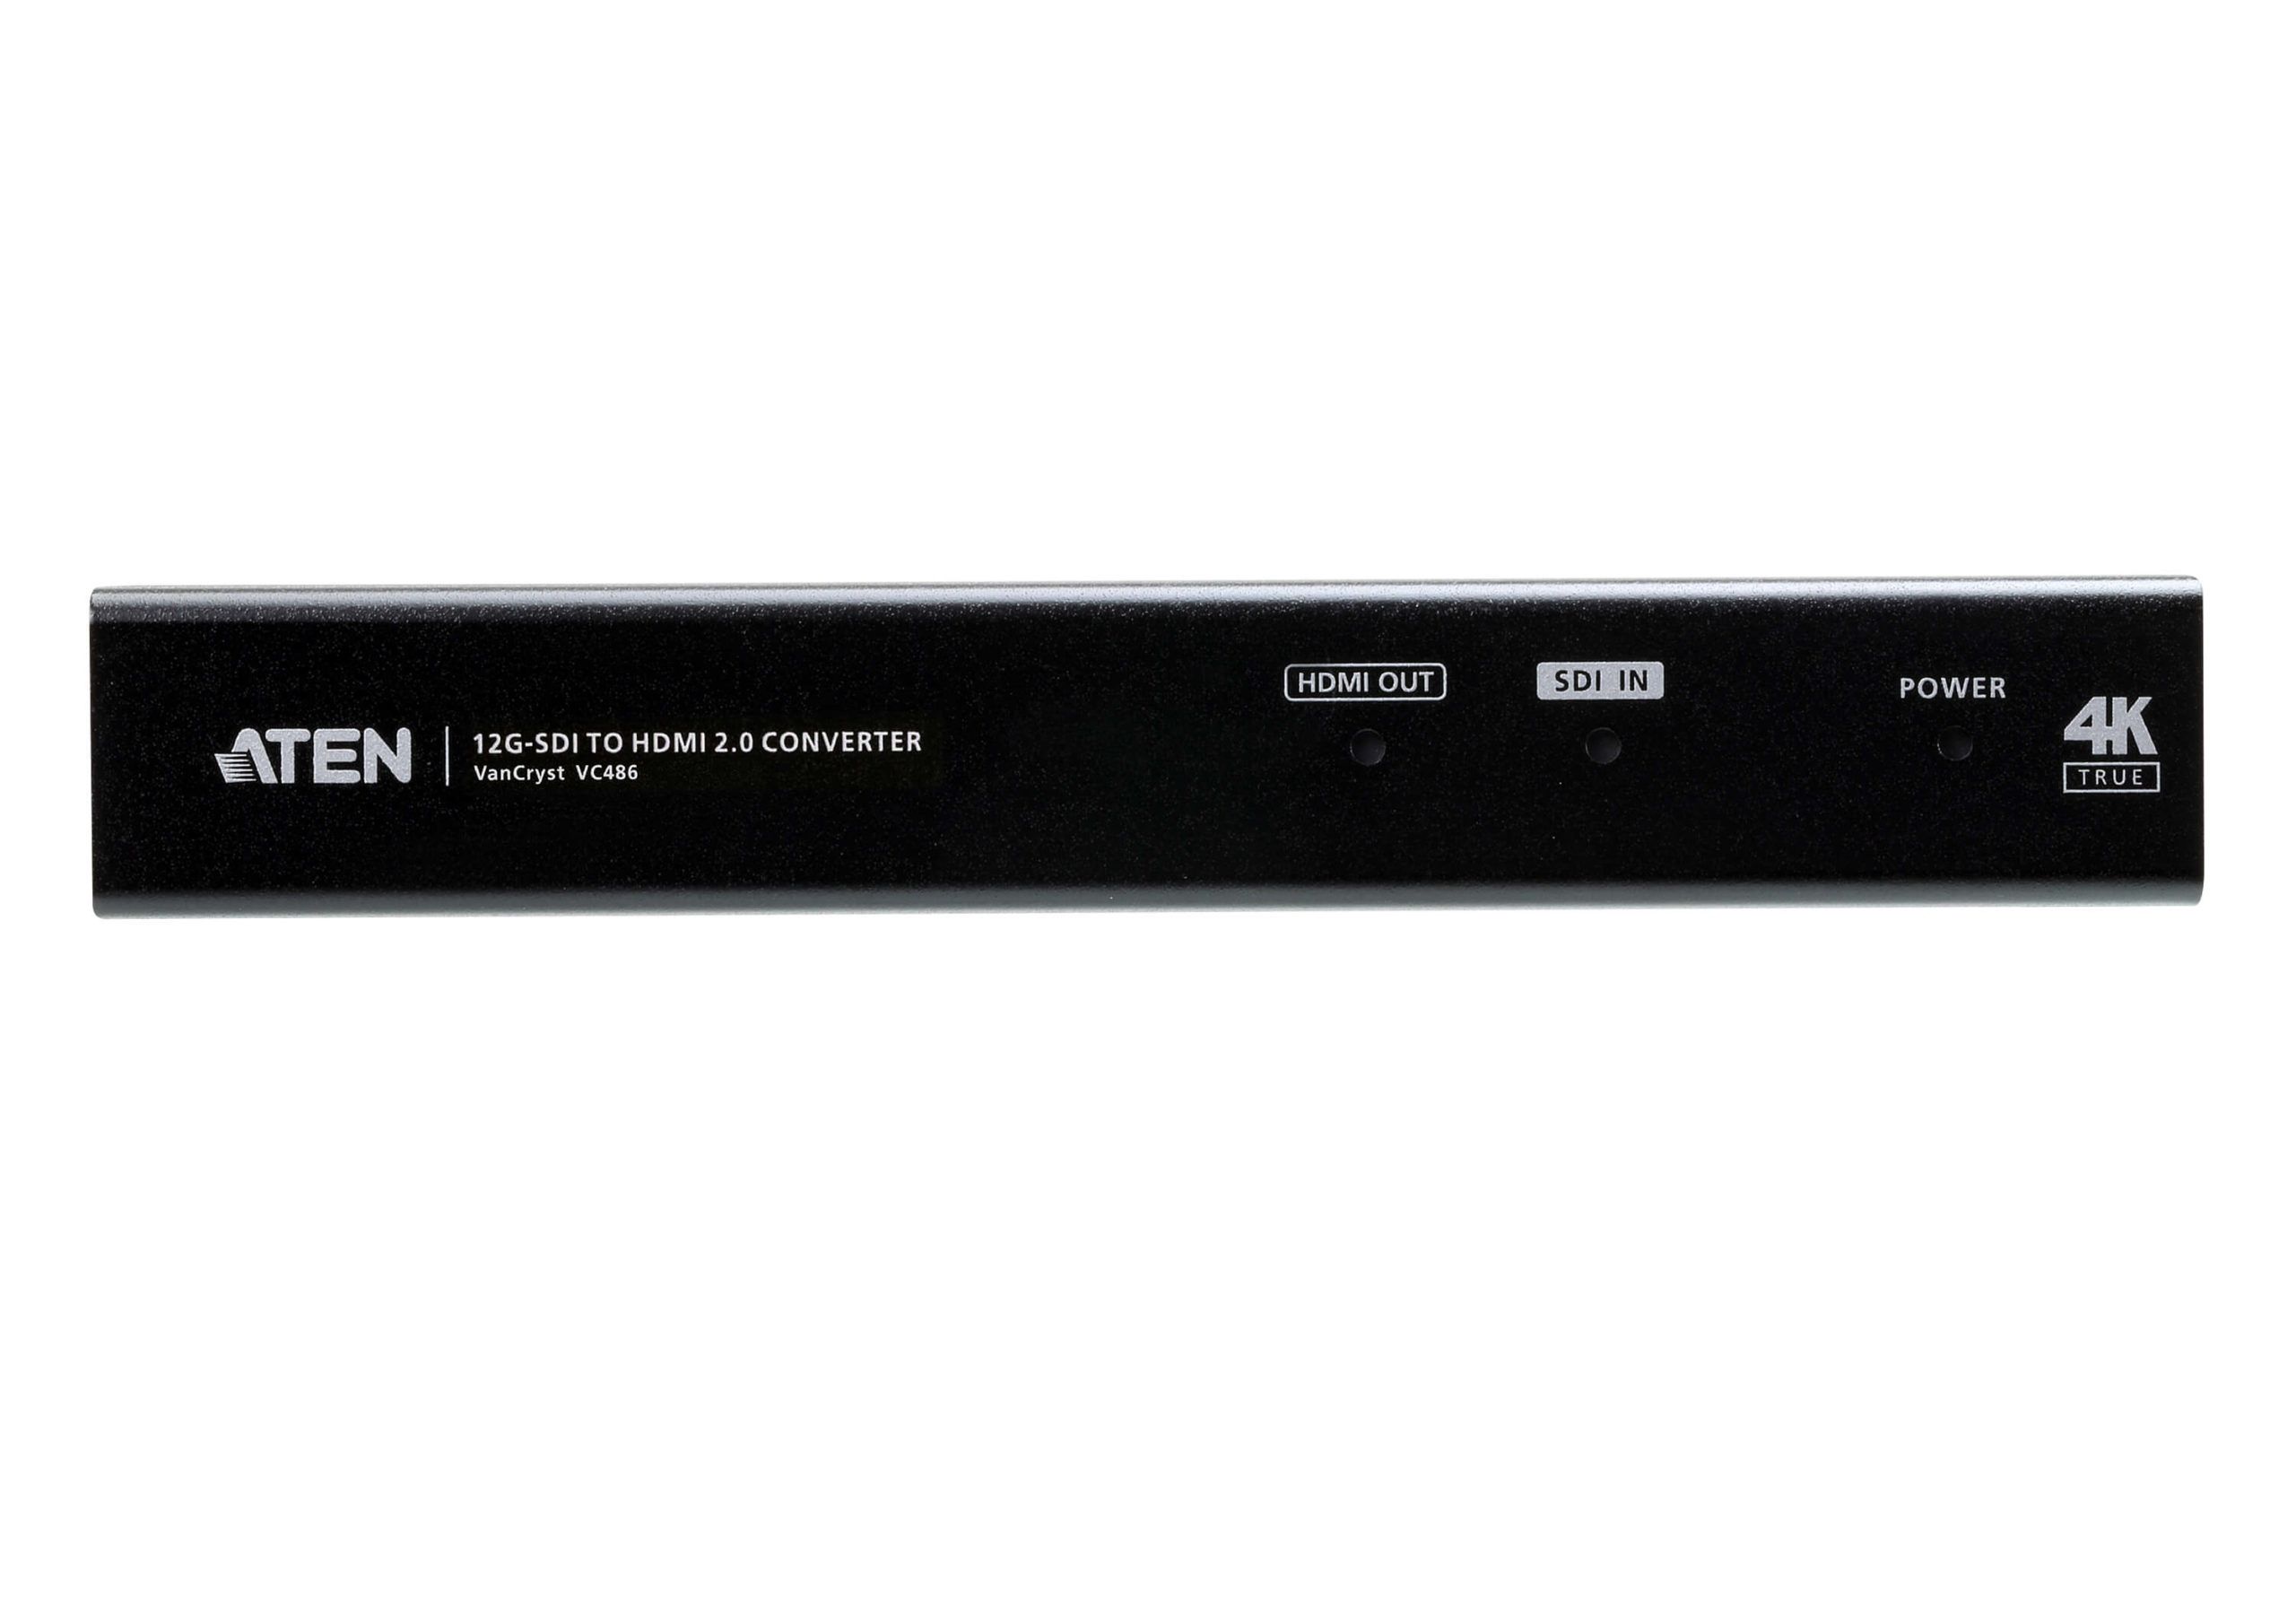 ATEN VC486-AT-G 12G-SDI to HDMI 2.0 Converter_3